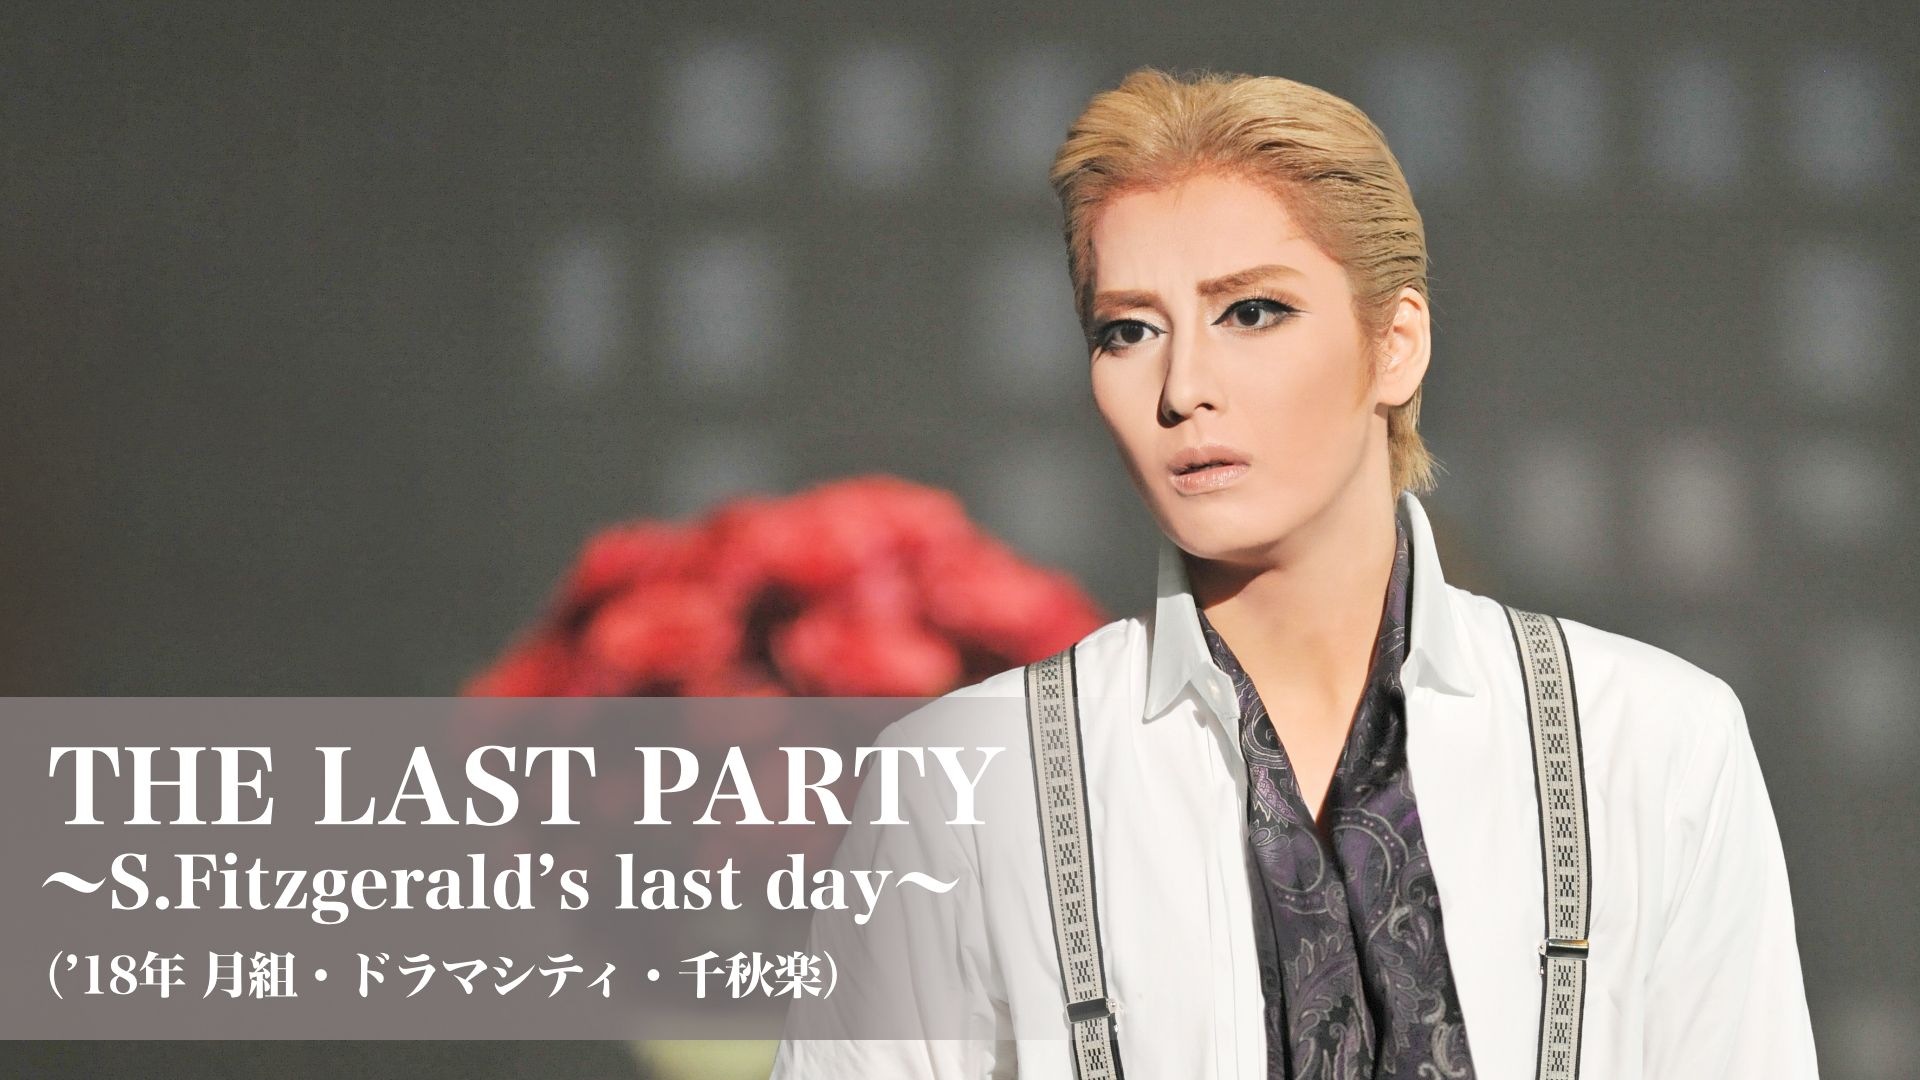 THE LAST PARTY 〜S.Fitzgerald’s last day〜(’18年月組・ドラマシティ・千秋楽)